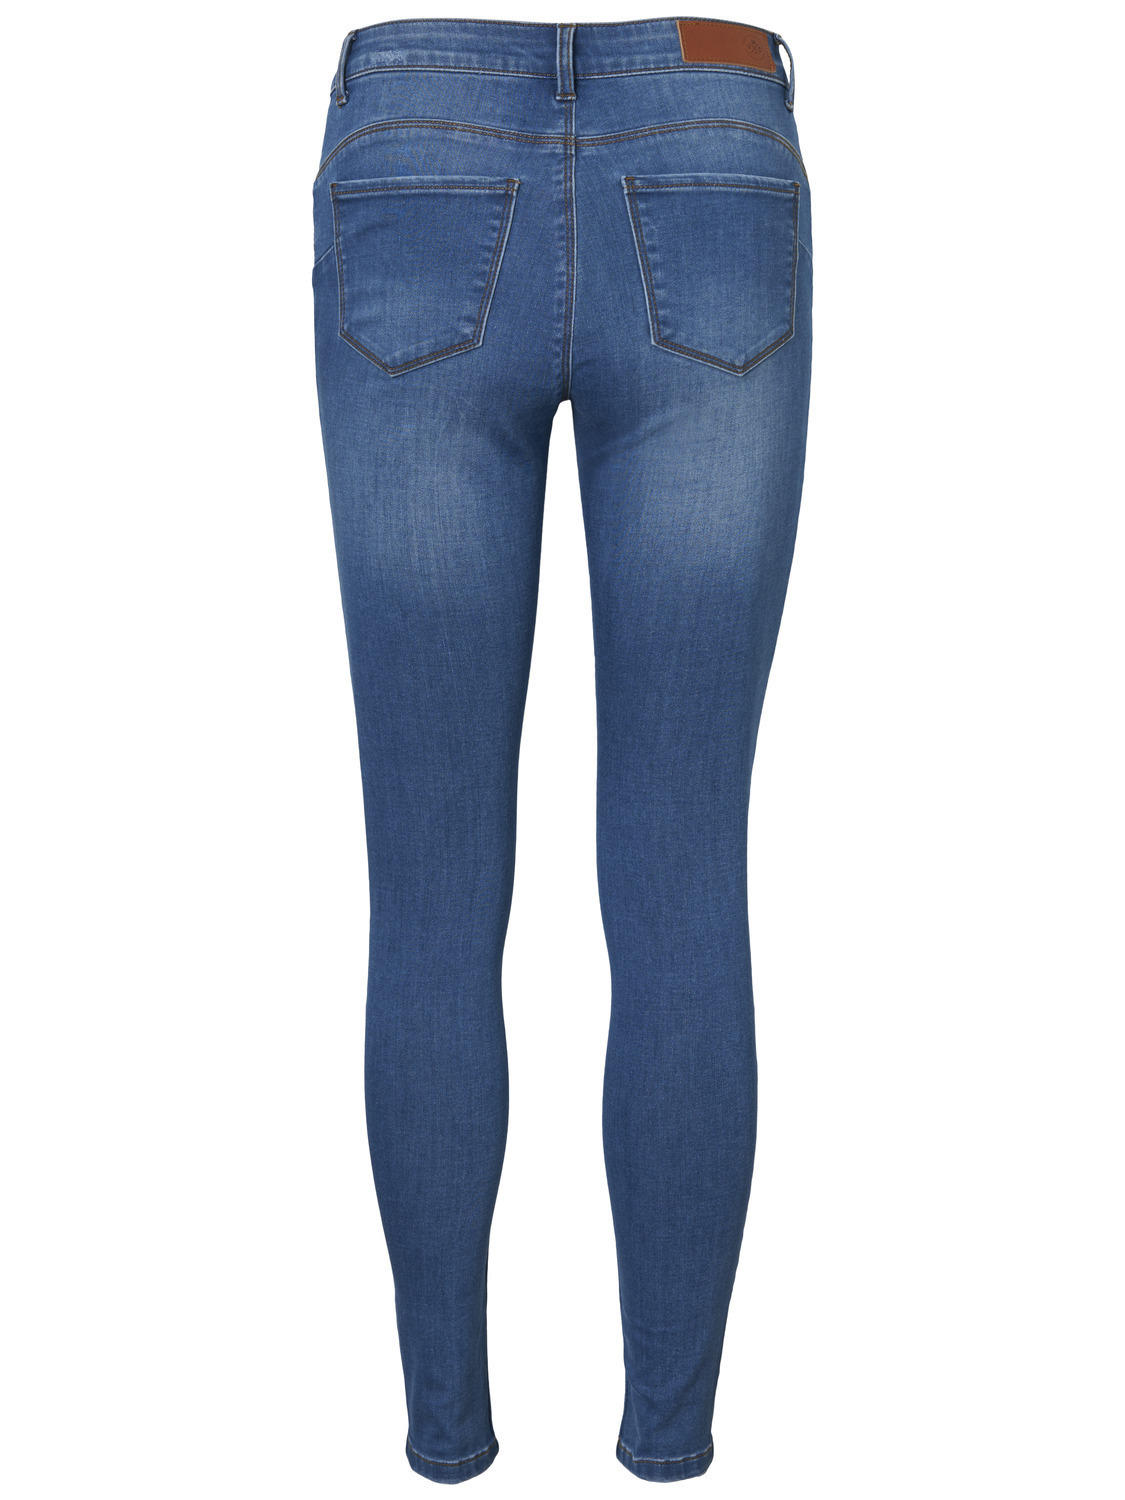 FINAL SALE - Seven mid waist slim fit jeans, MEDIUM BLUE DENIM, large